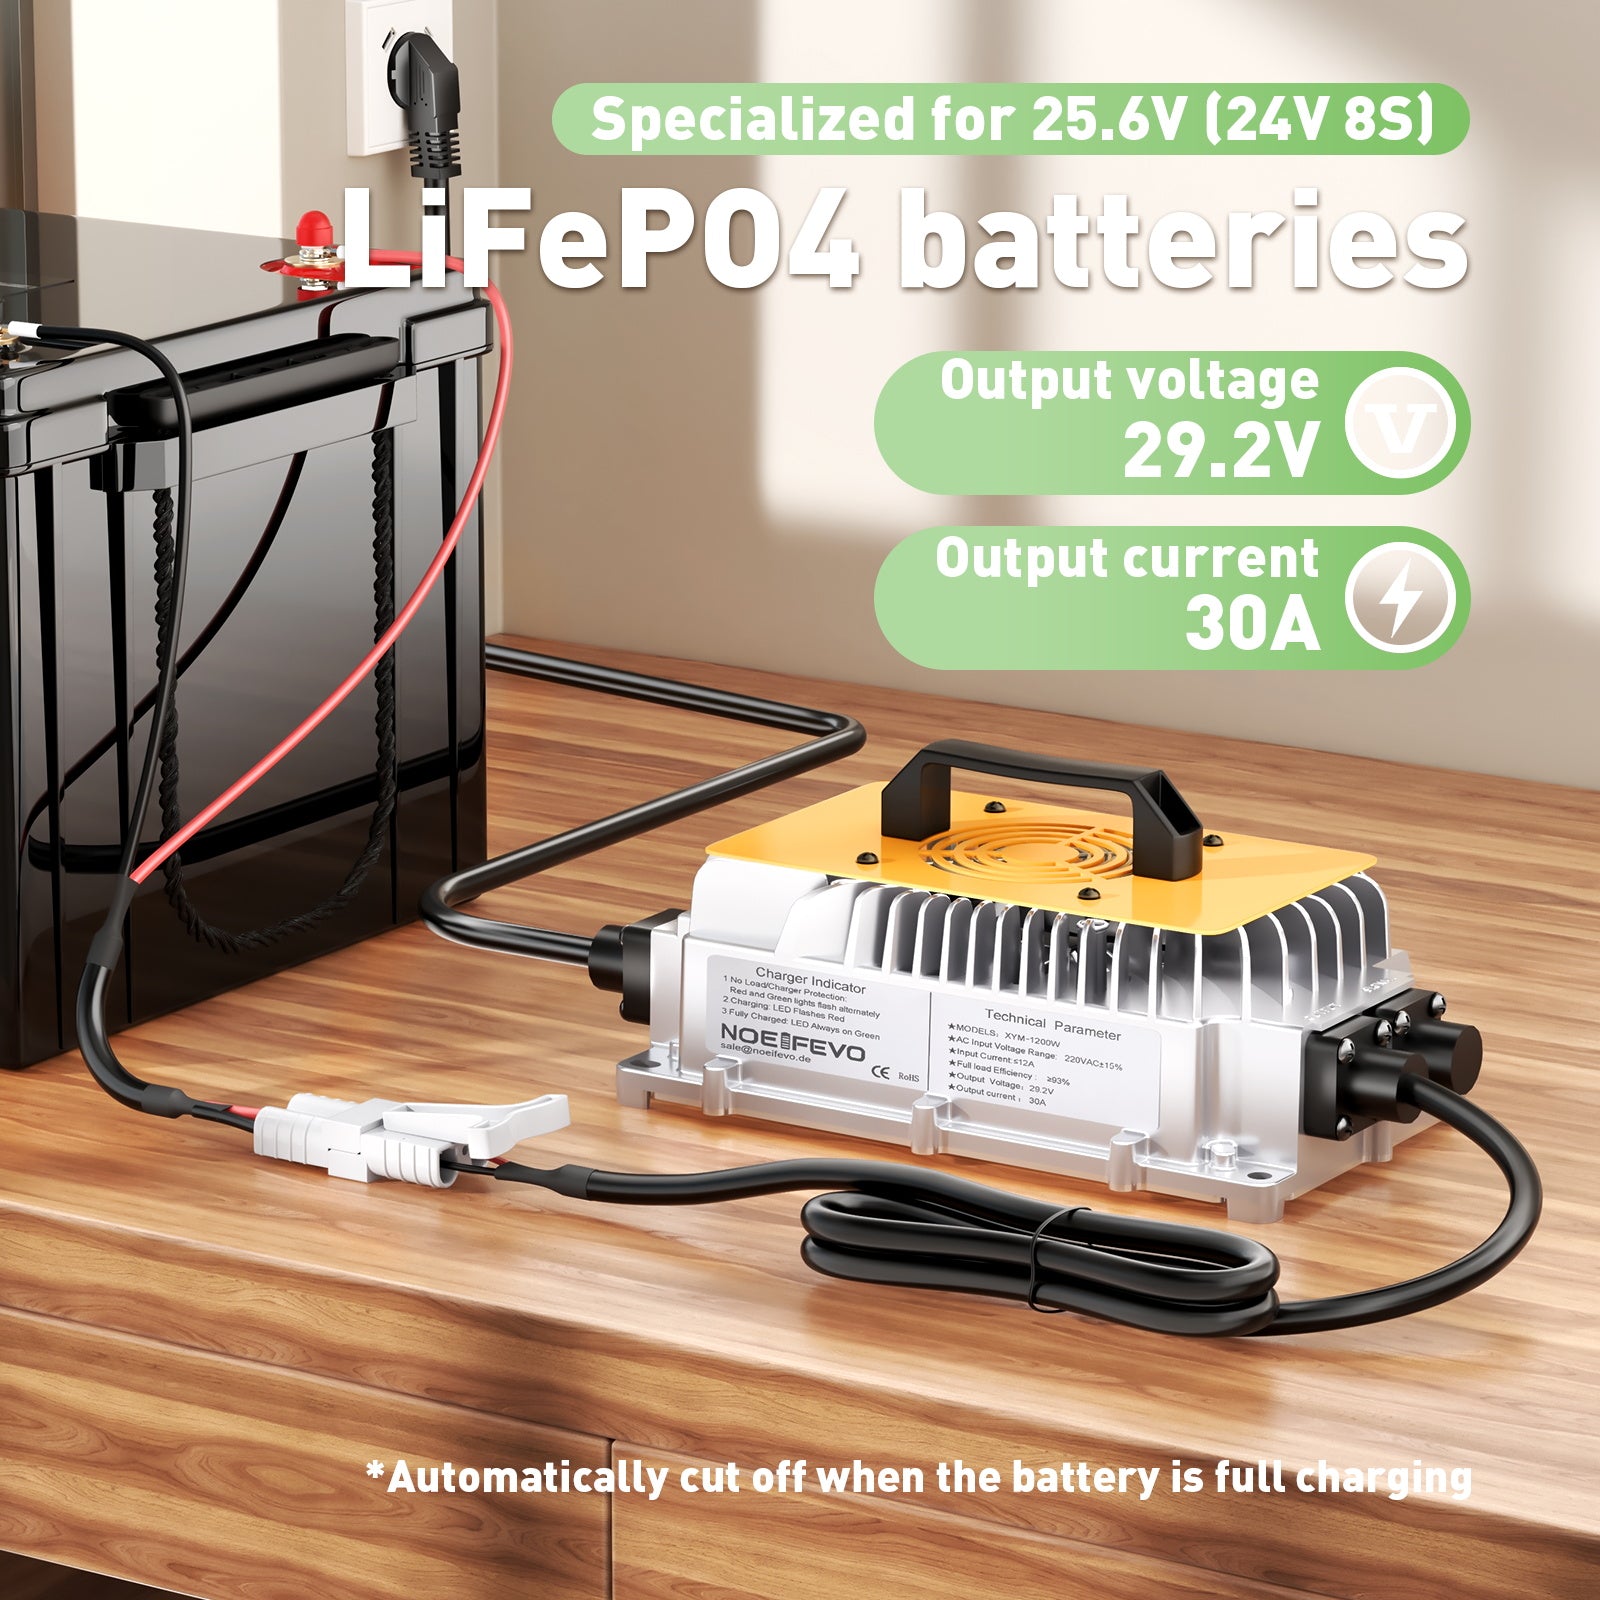 Noeifevo 29.2V 30A LiFePO4 Batterie Ladegerät für 24V 25.6V LiFePO4 Ak –  Smart LifePO4 Batterie & Heimspeicherung von Energie & Intelligentes  Ladegerät